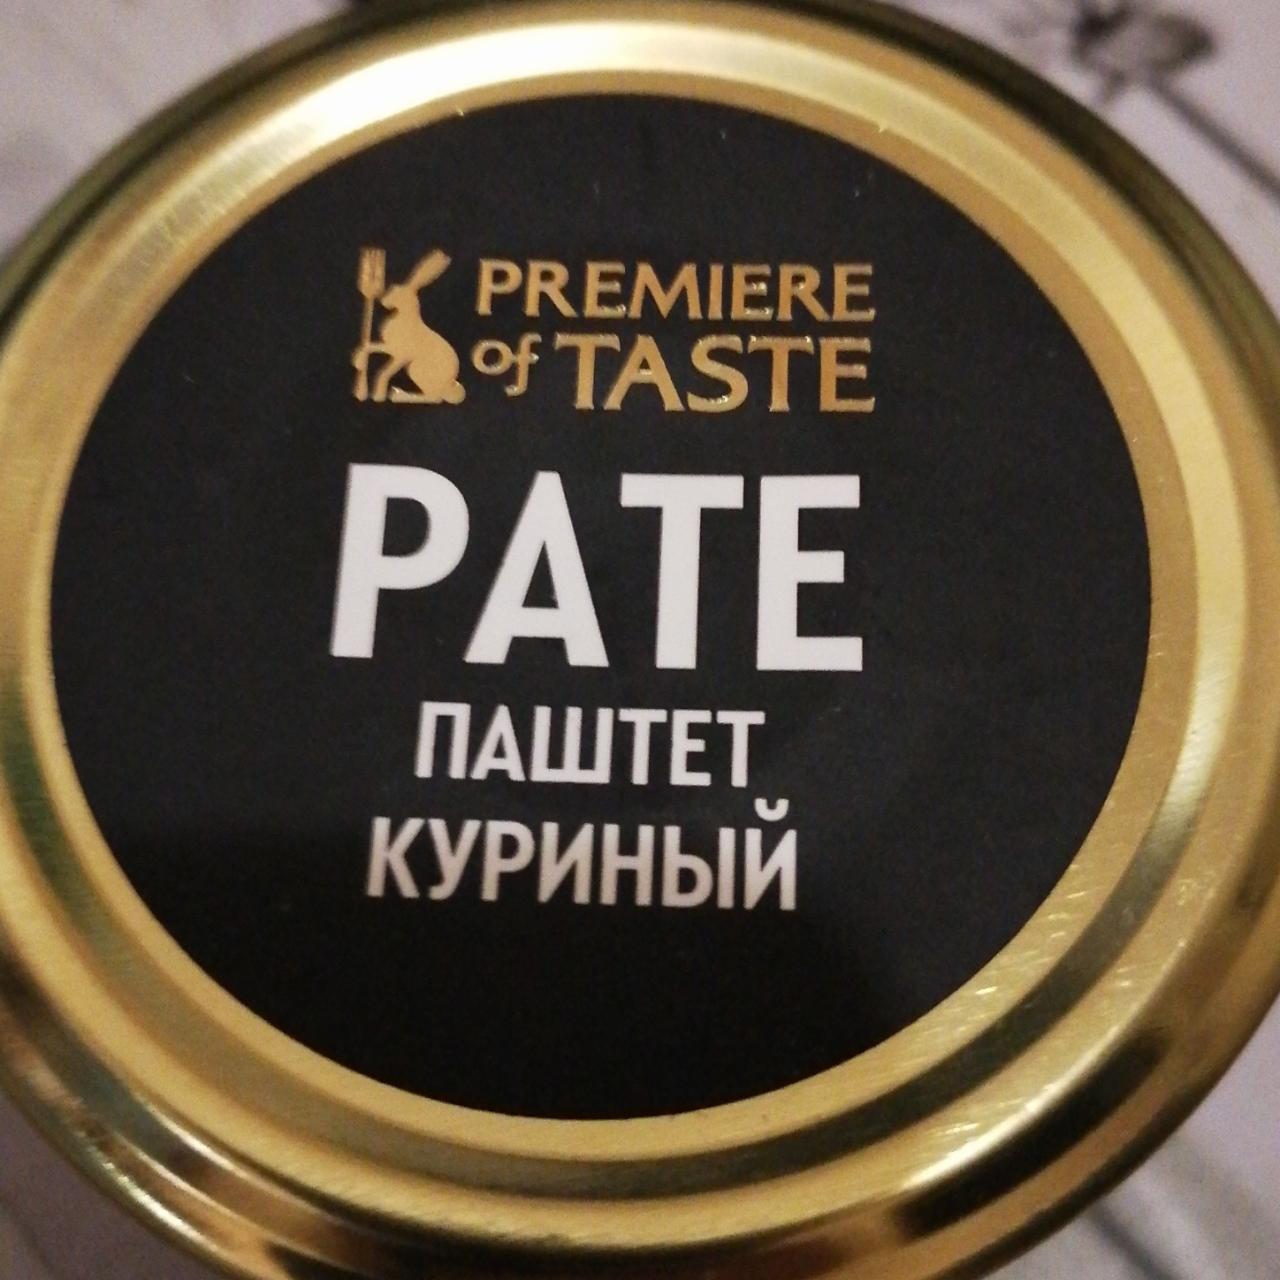 Фото - Паштет куриный Pate Premiere of taste